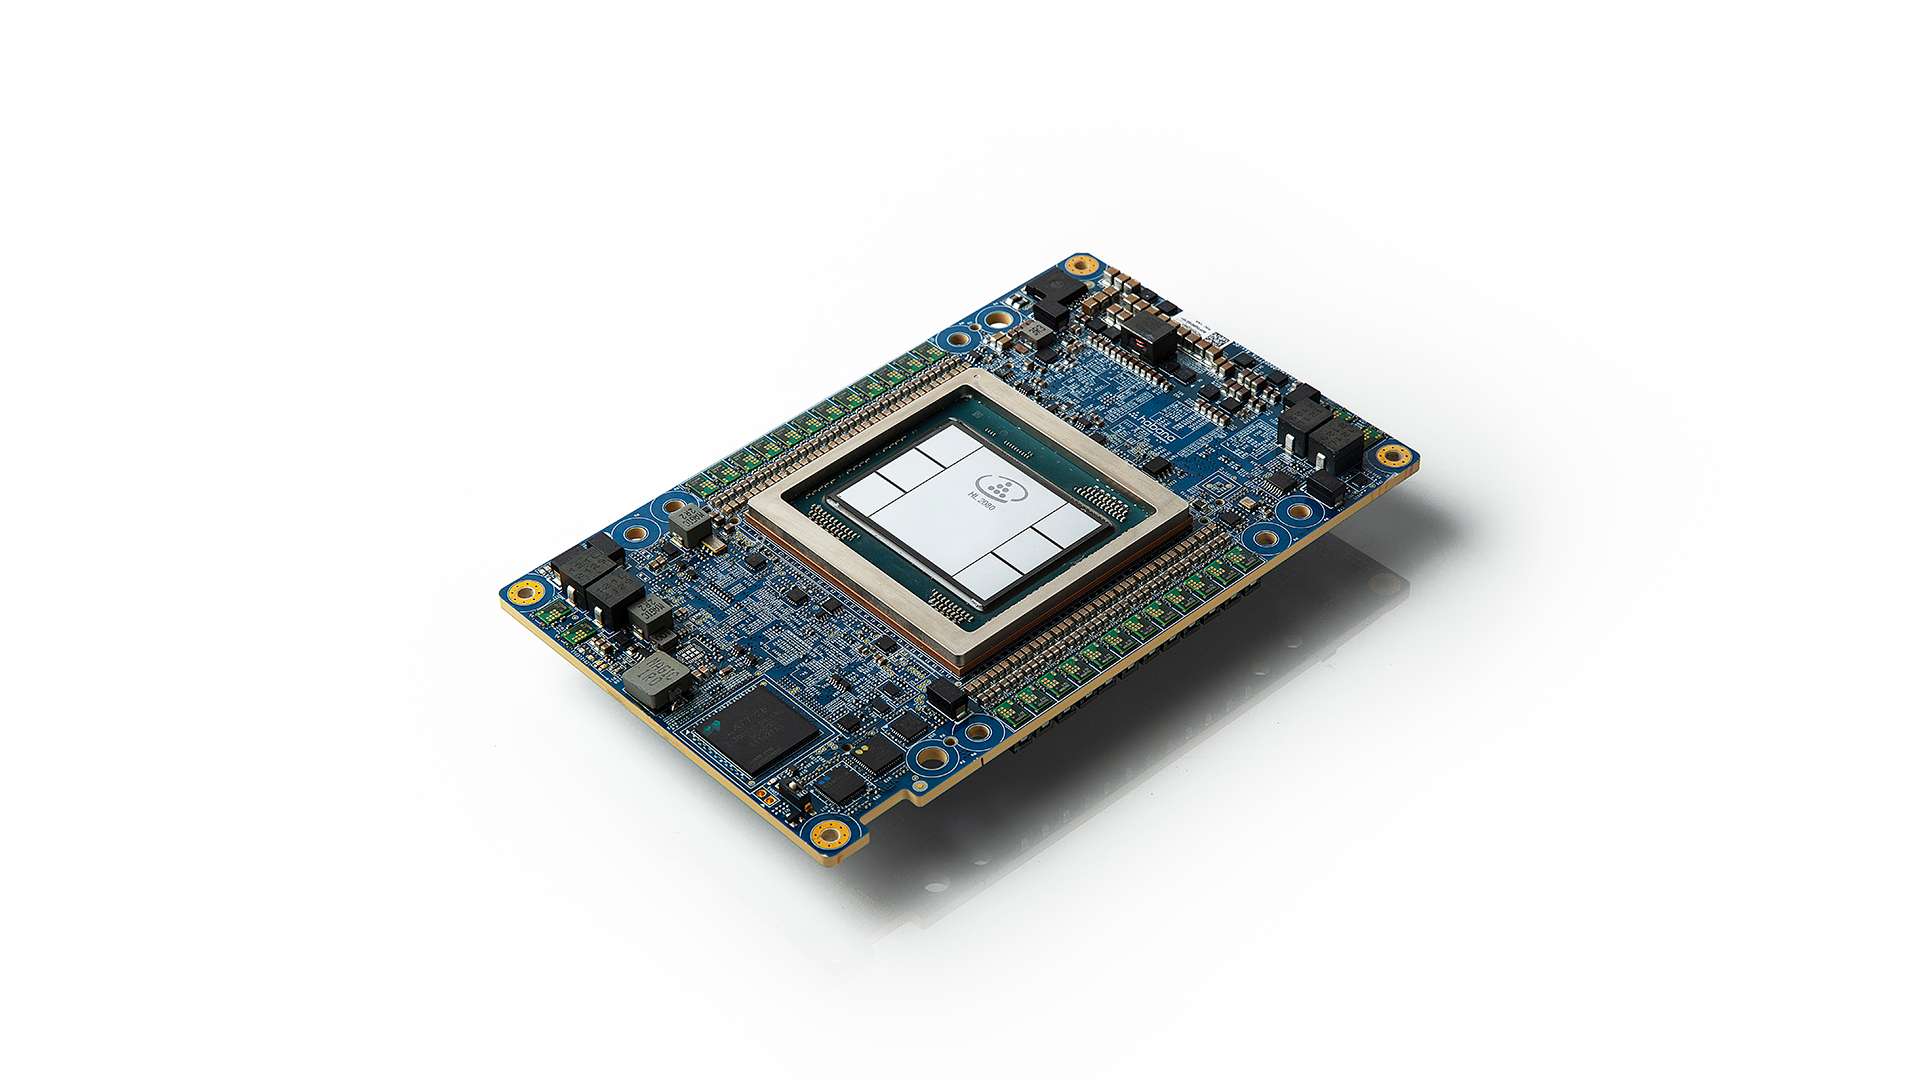  A photo of an Intel Gaudi 3 AI Accelerator, a next-generation AI chip.